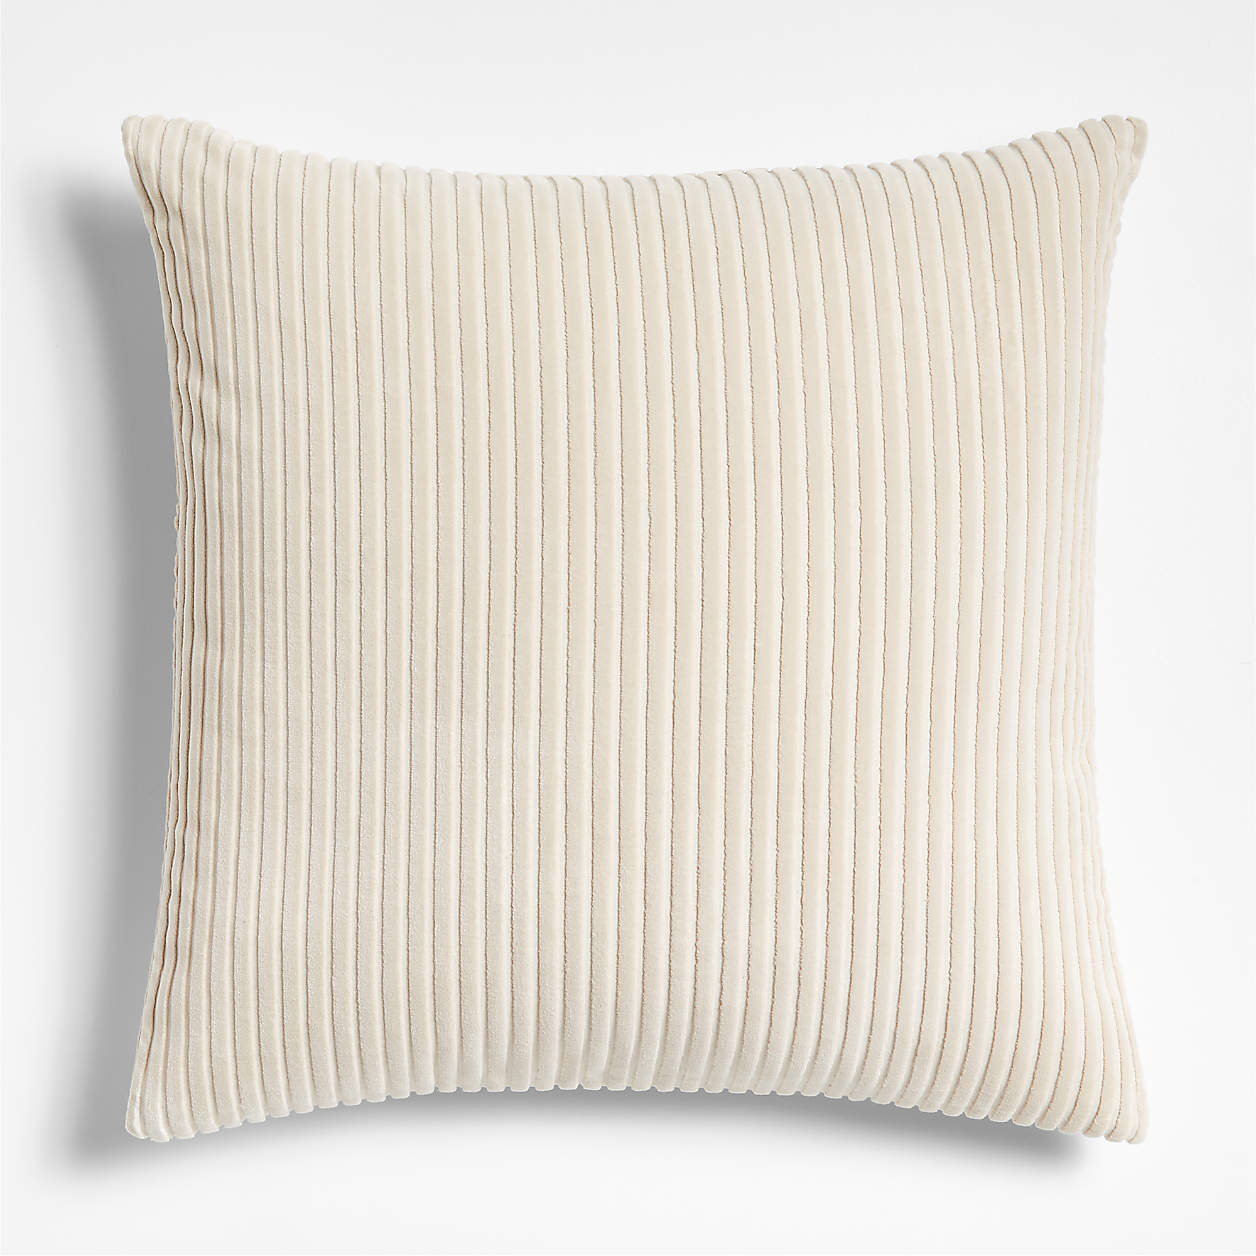 Creste 22"x22" Ivory Throw Pillow Cover by Athena Calderone